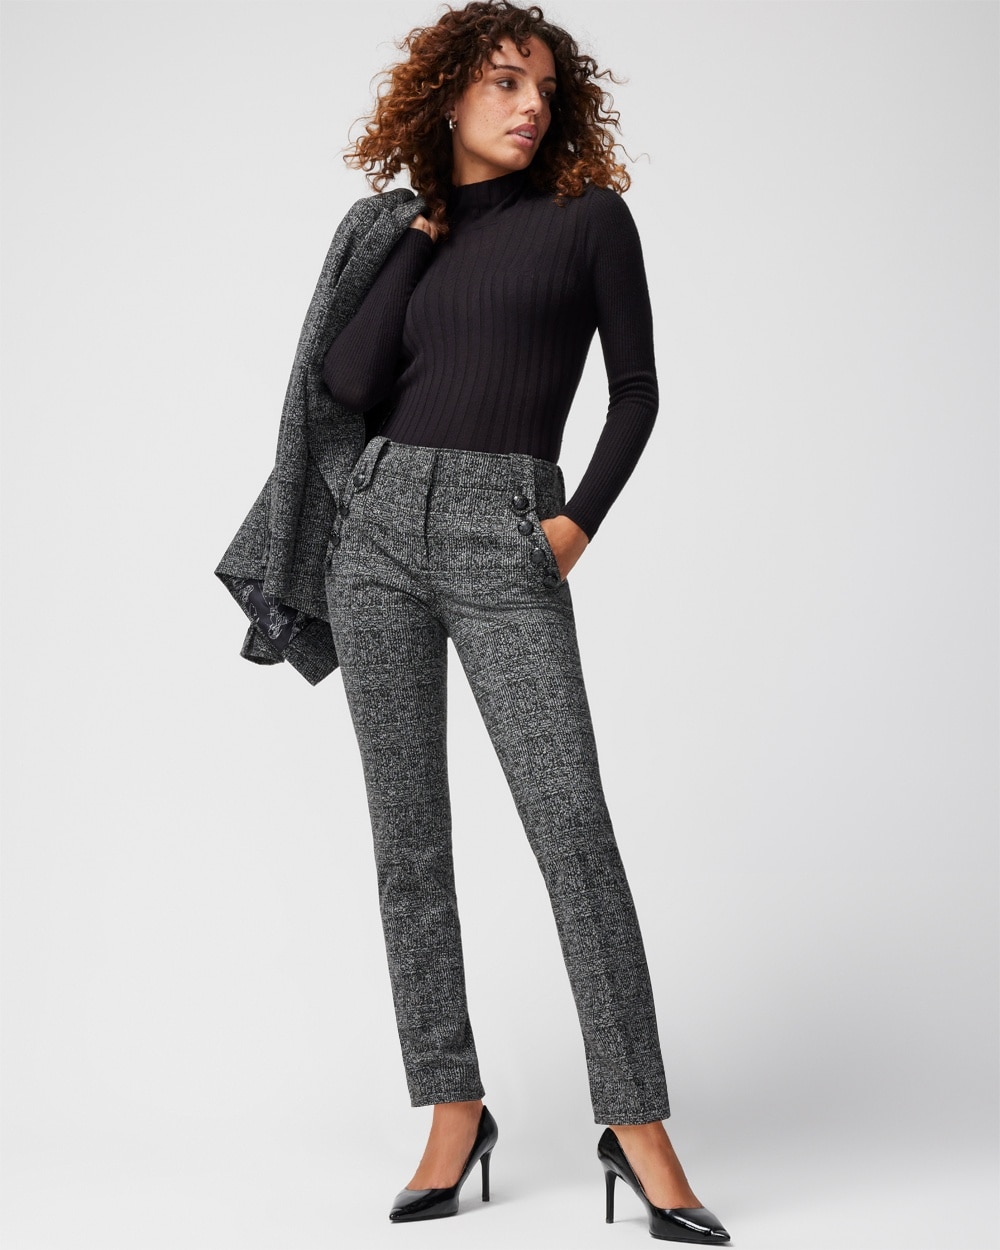 Women's Jolie Glenn Plaid Button Straight Pants in Black/Gray Plaid Size 8 | White House Black Market, Business Casual Work Clothes